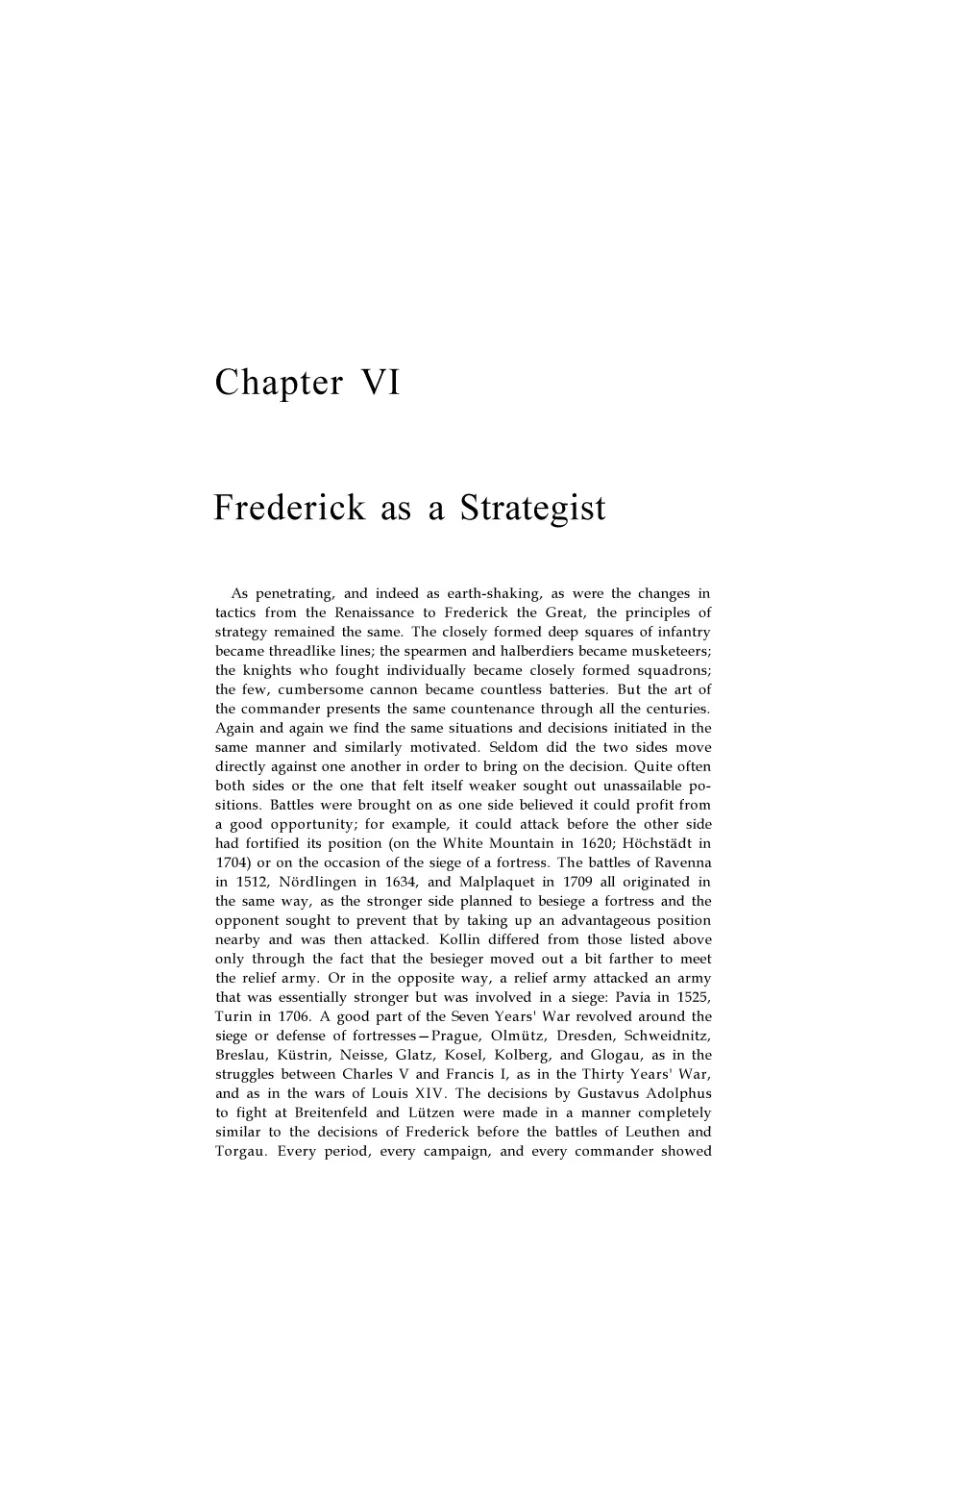 Frederick as a Strategist